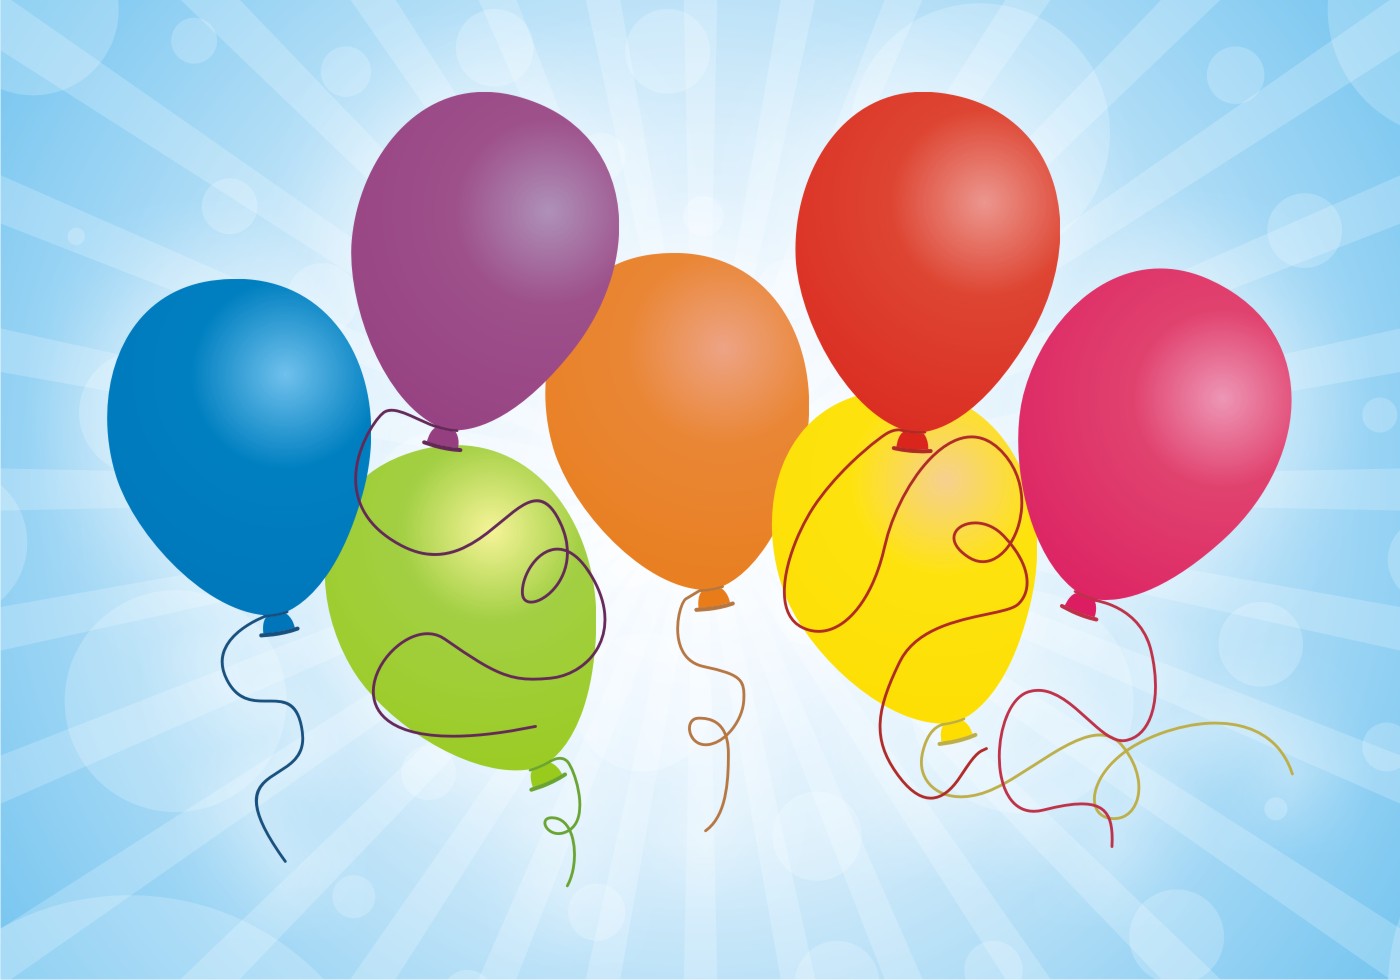 Download Set Of Balloons Free Vector - Download Free Vectors ...